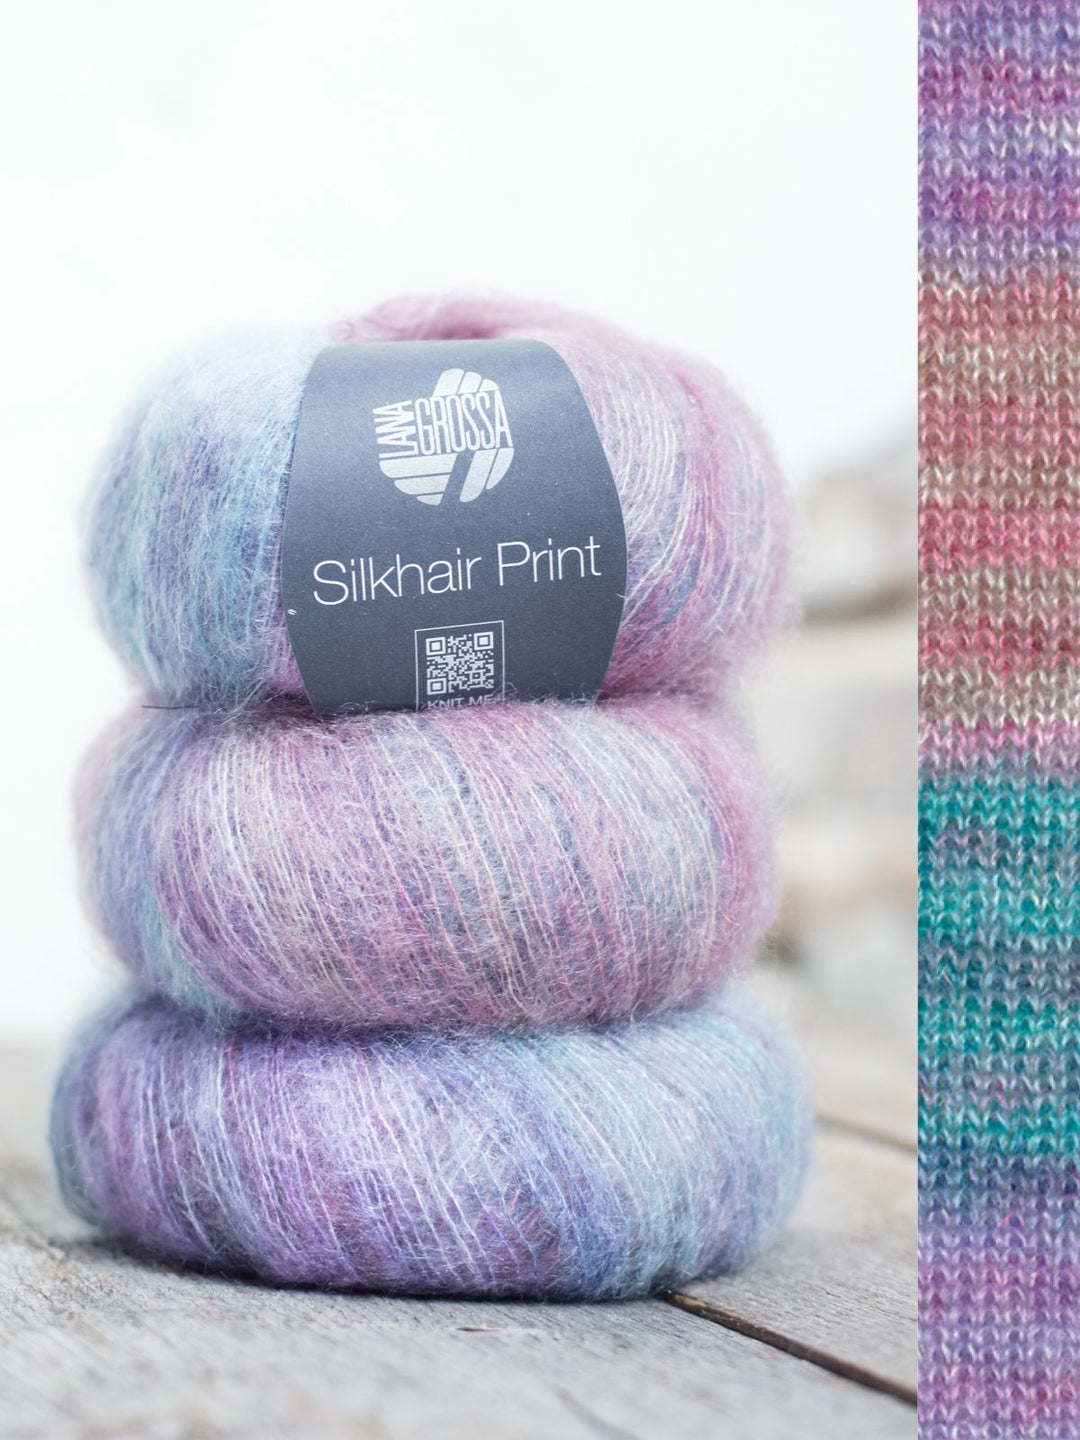 Silkhair Print 426 Blauwviolet / Taupe / Turquoise